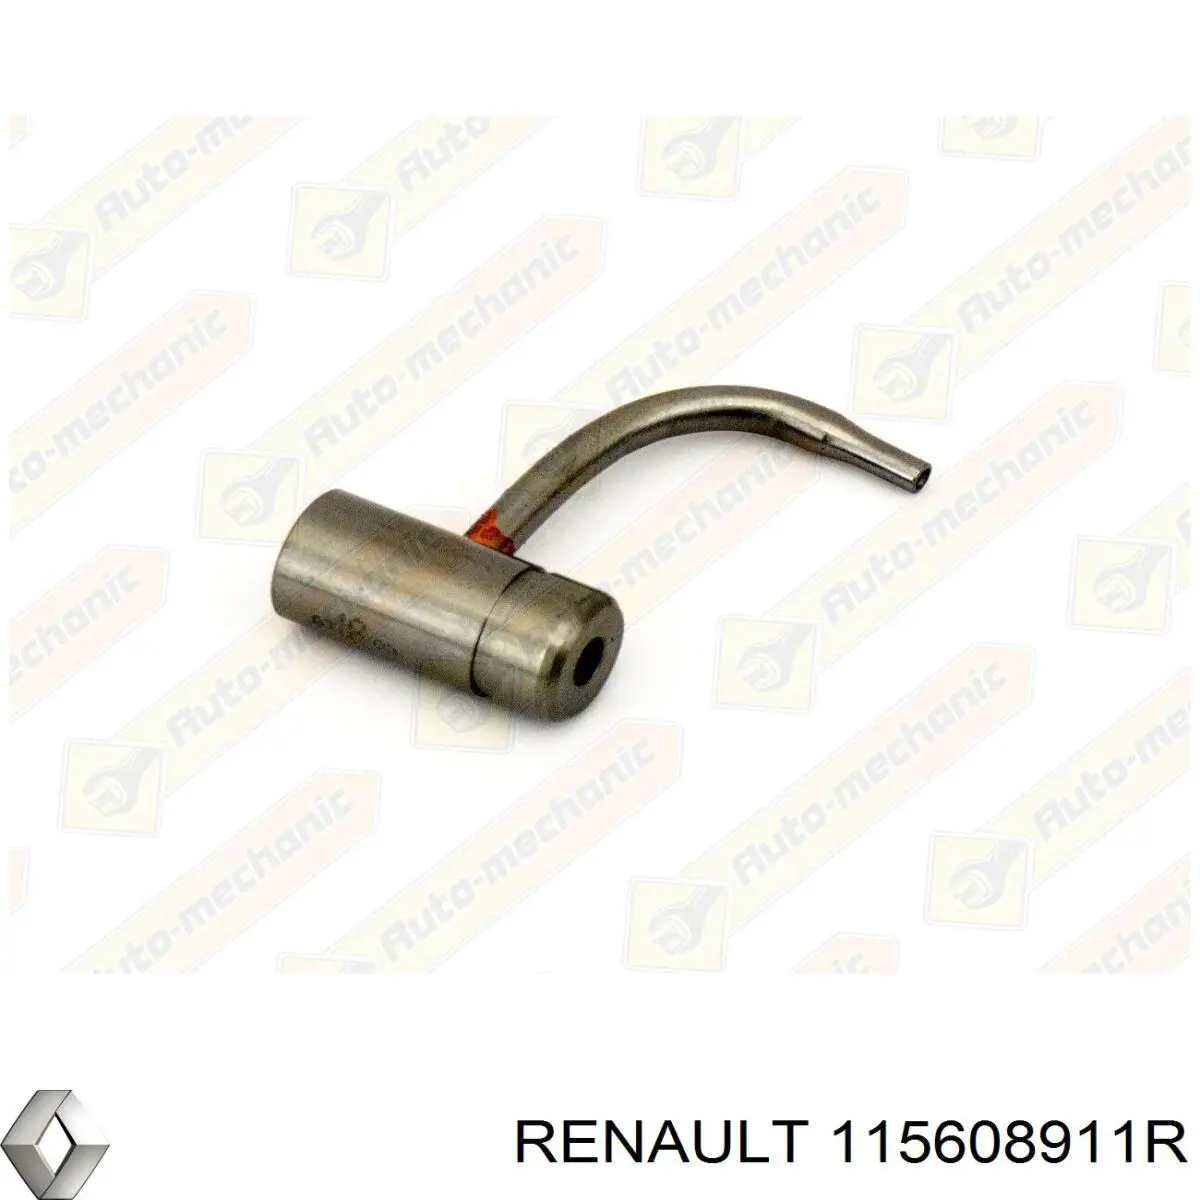 115608911R Renault (RVI) injetor de óleo